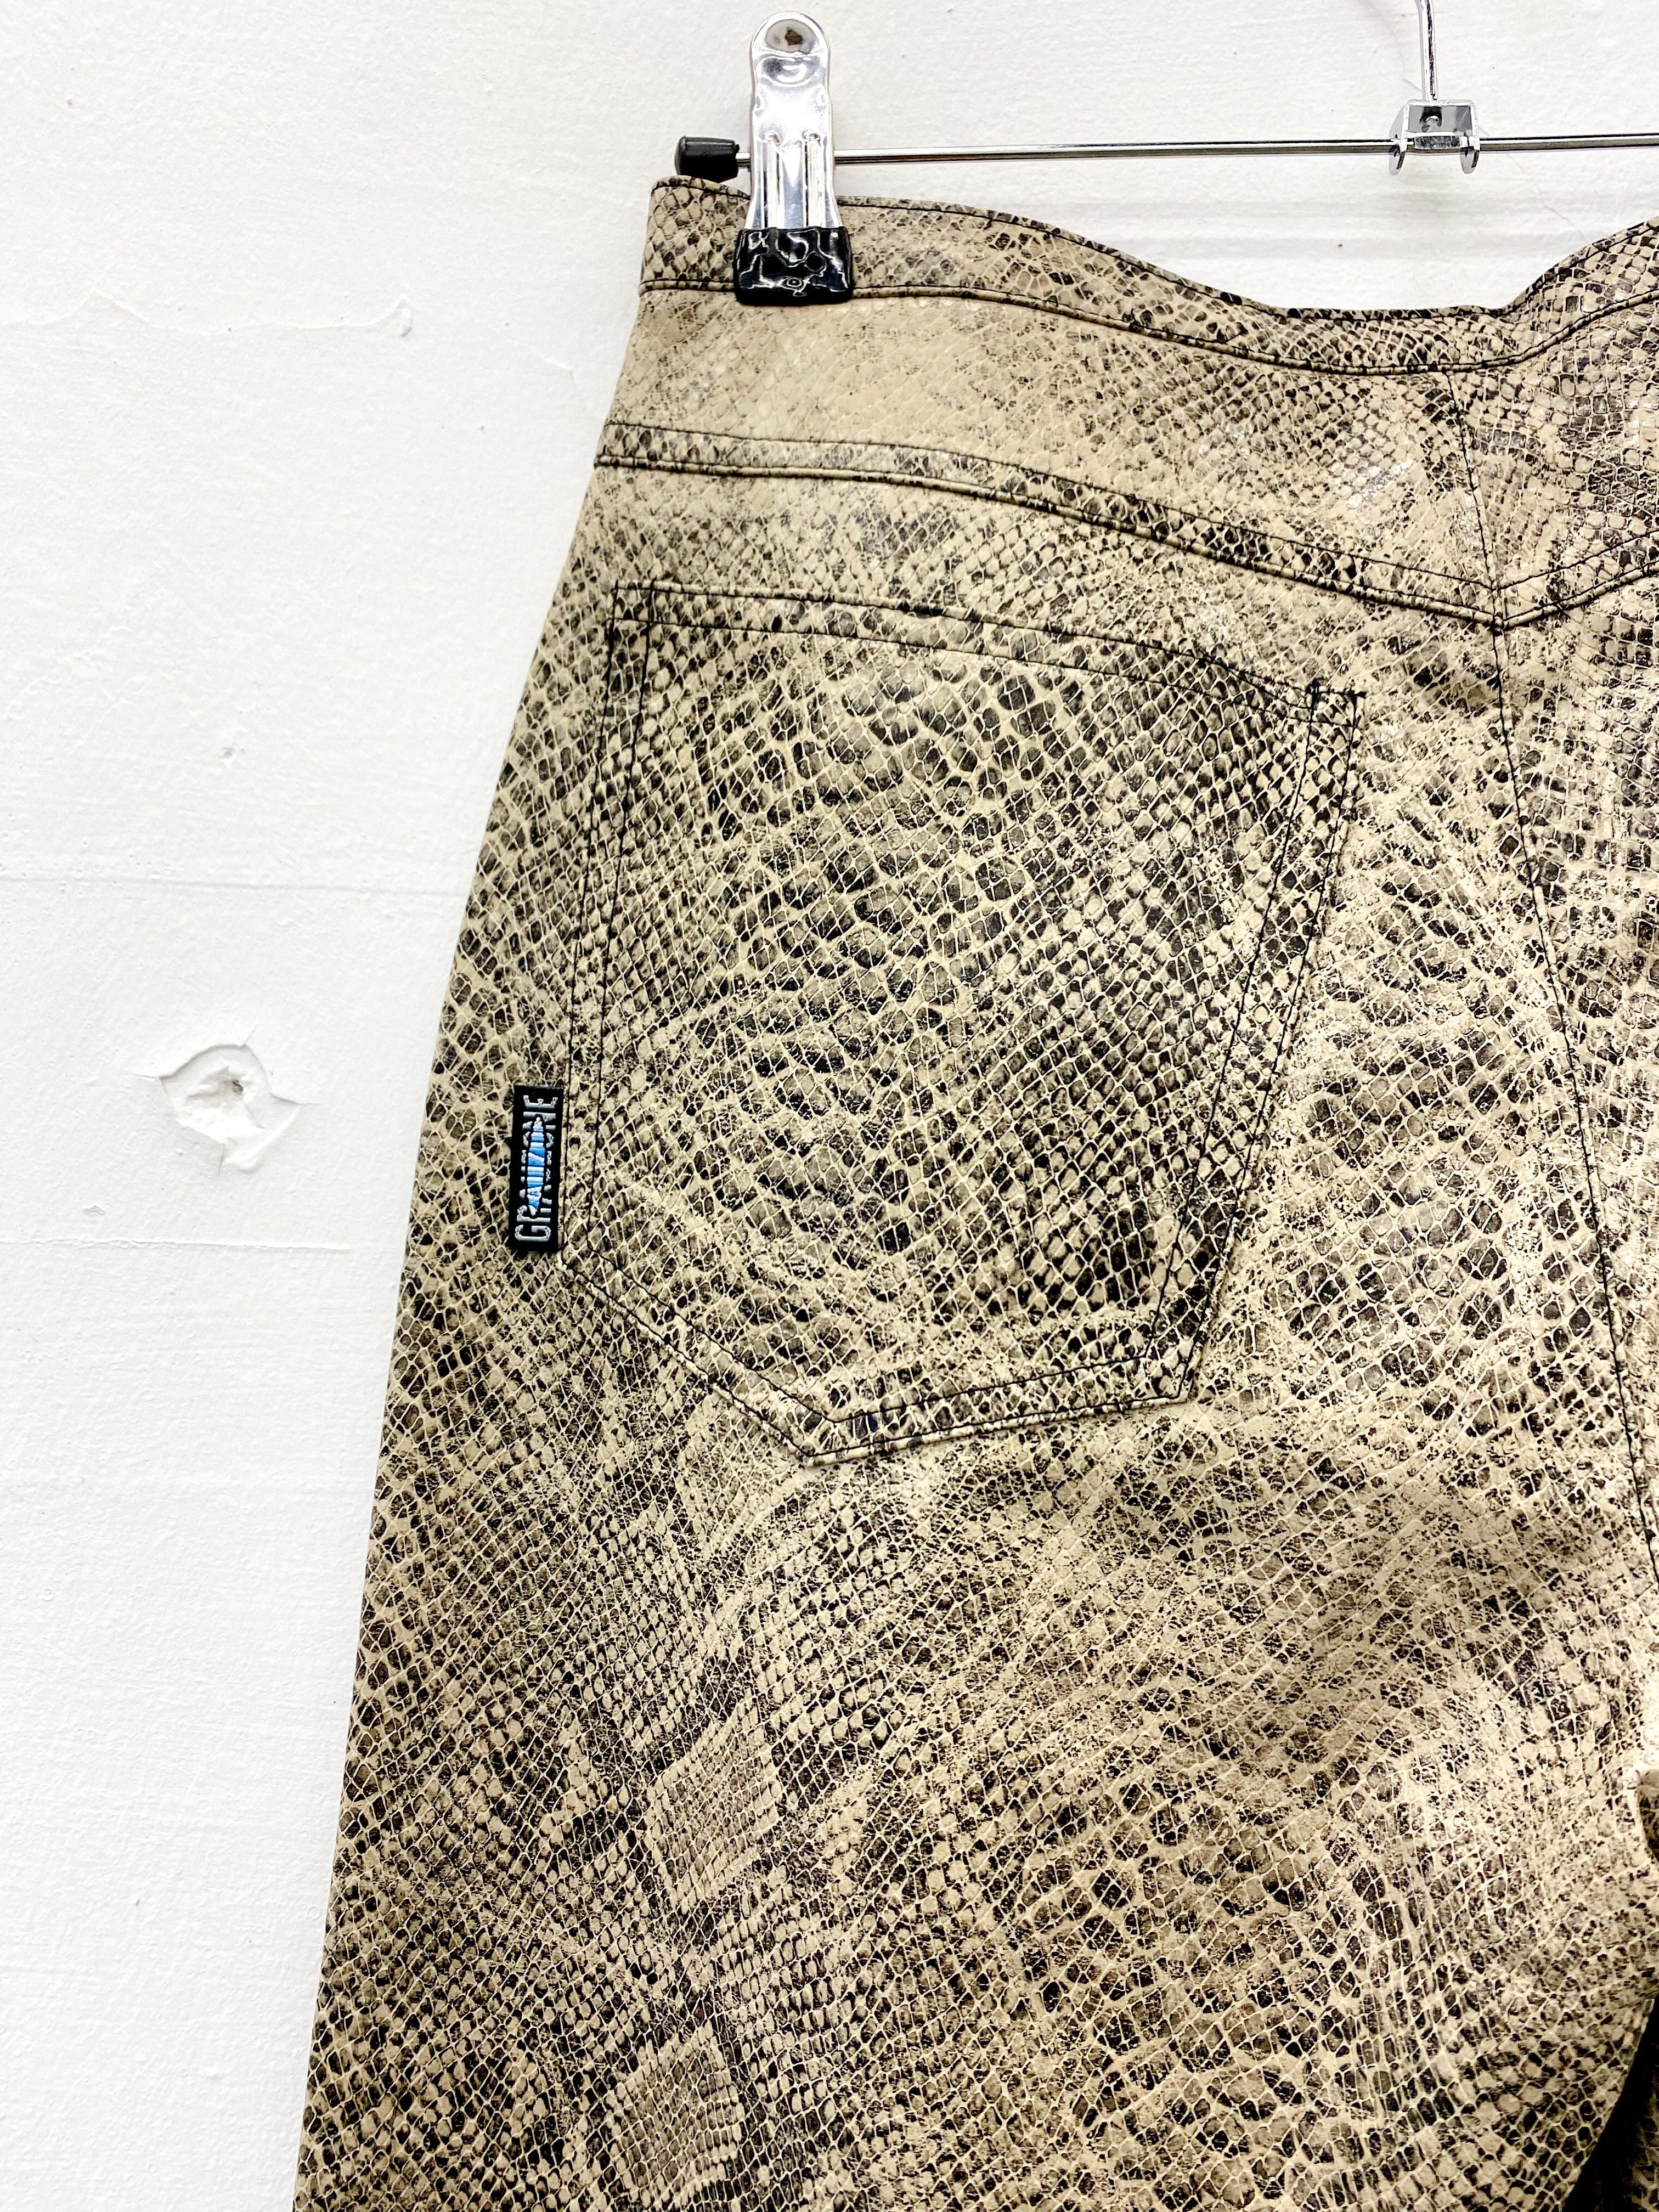 Snakeskin Leatherette Pants 26"W | 31"L